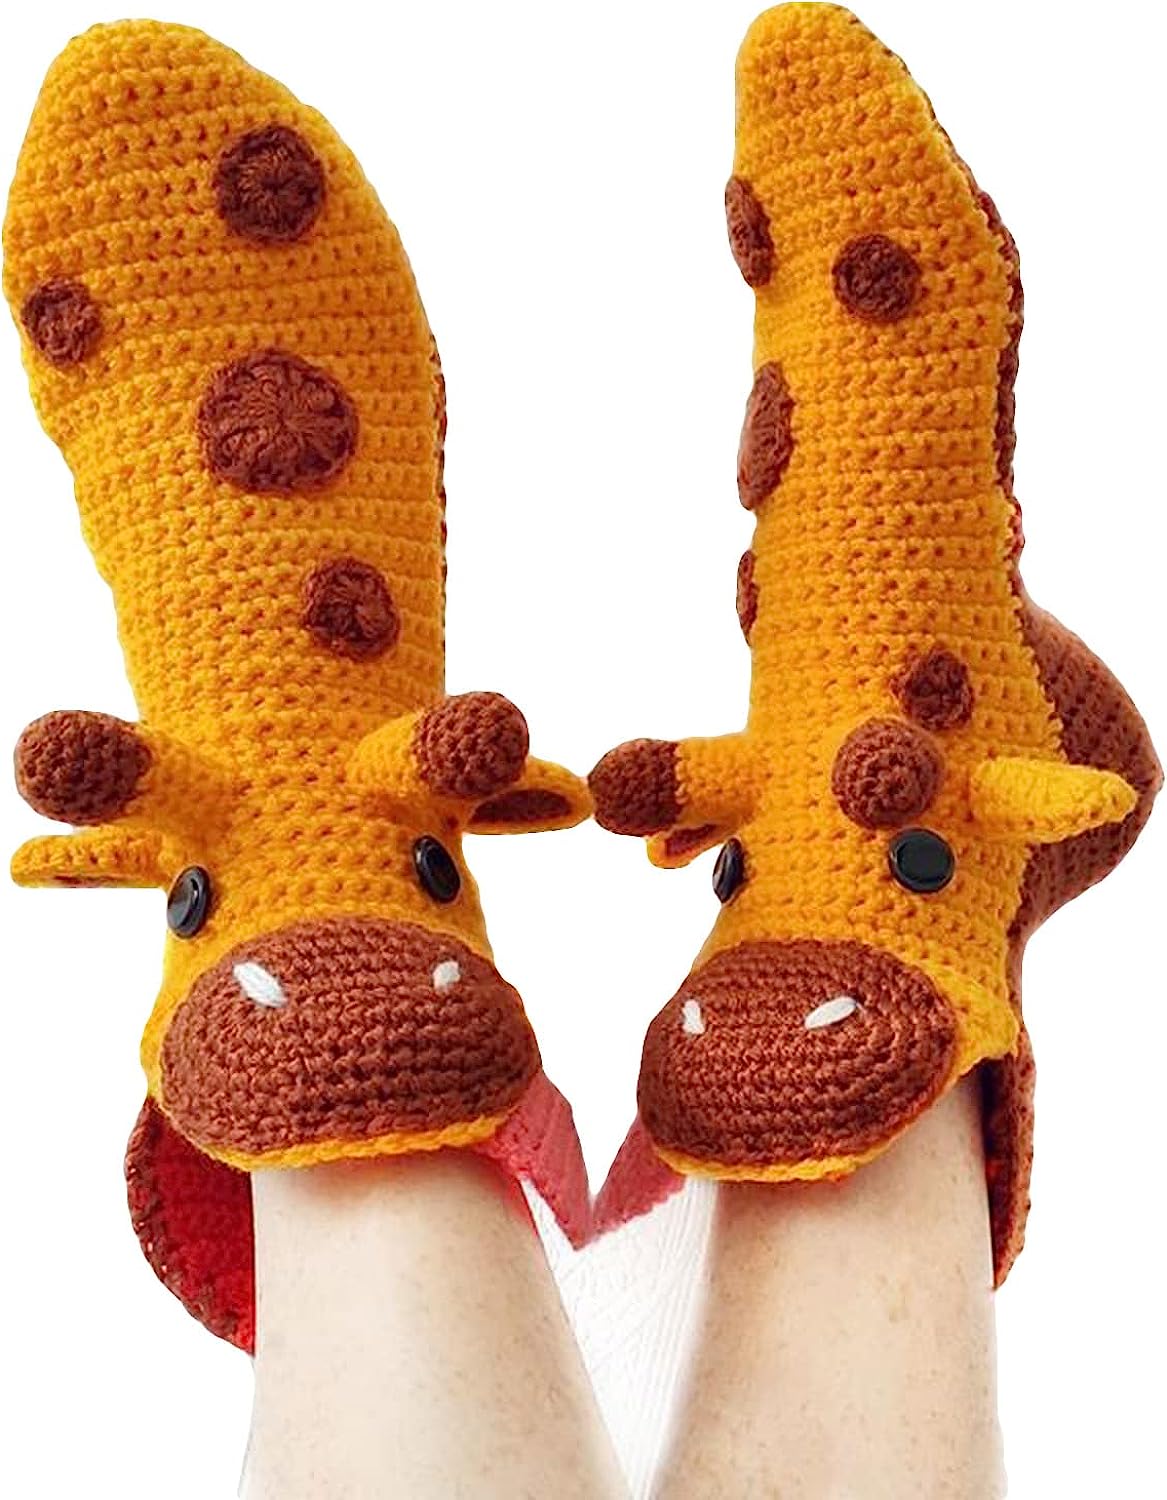 THATLILSHOP One Size / Deer Women Men Novelty Animal Pattern Socks Crazy Funny Knit Crocodile Socks Funny Gifts